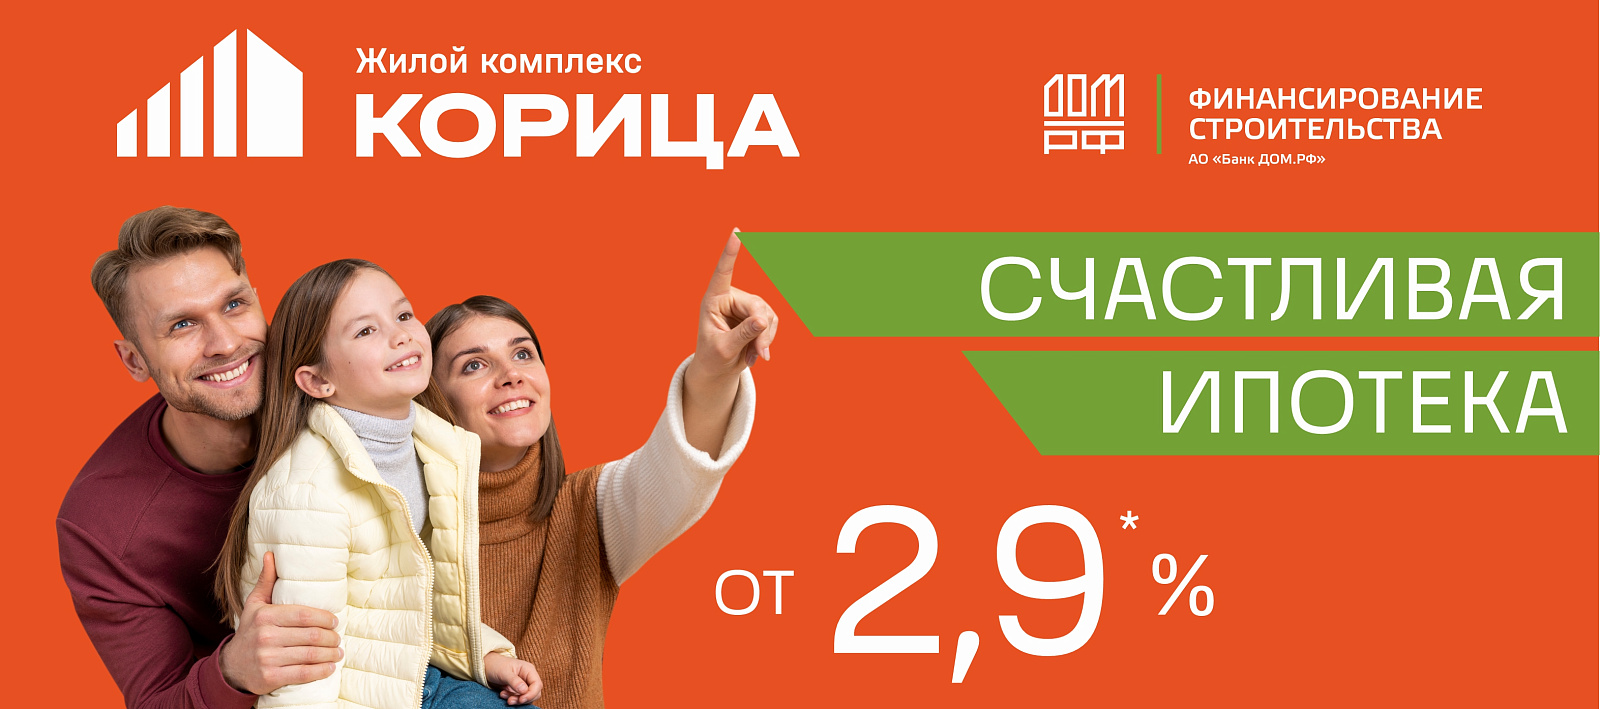 Счастливая ипотека от 2,9%* в ЖК "Корица"